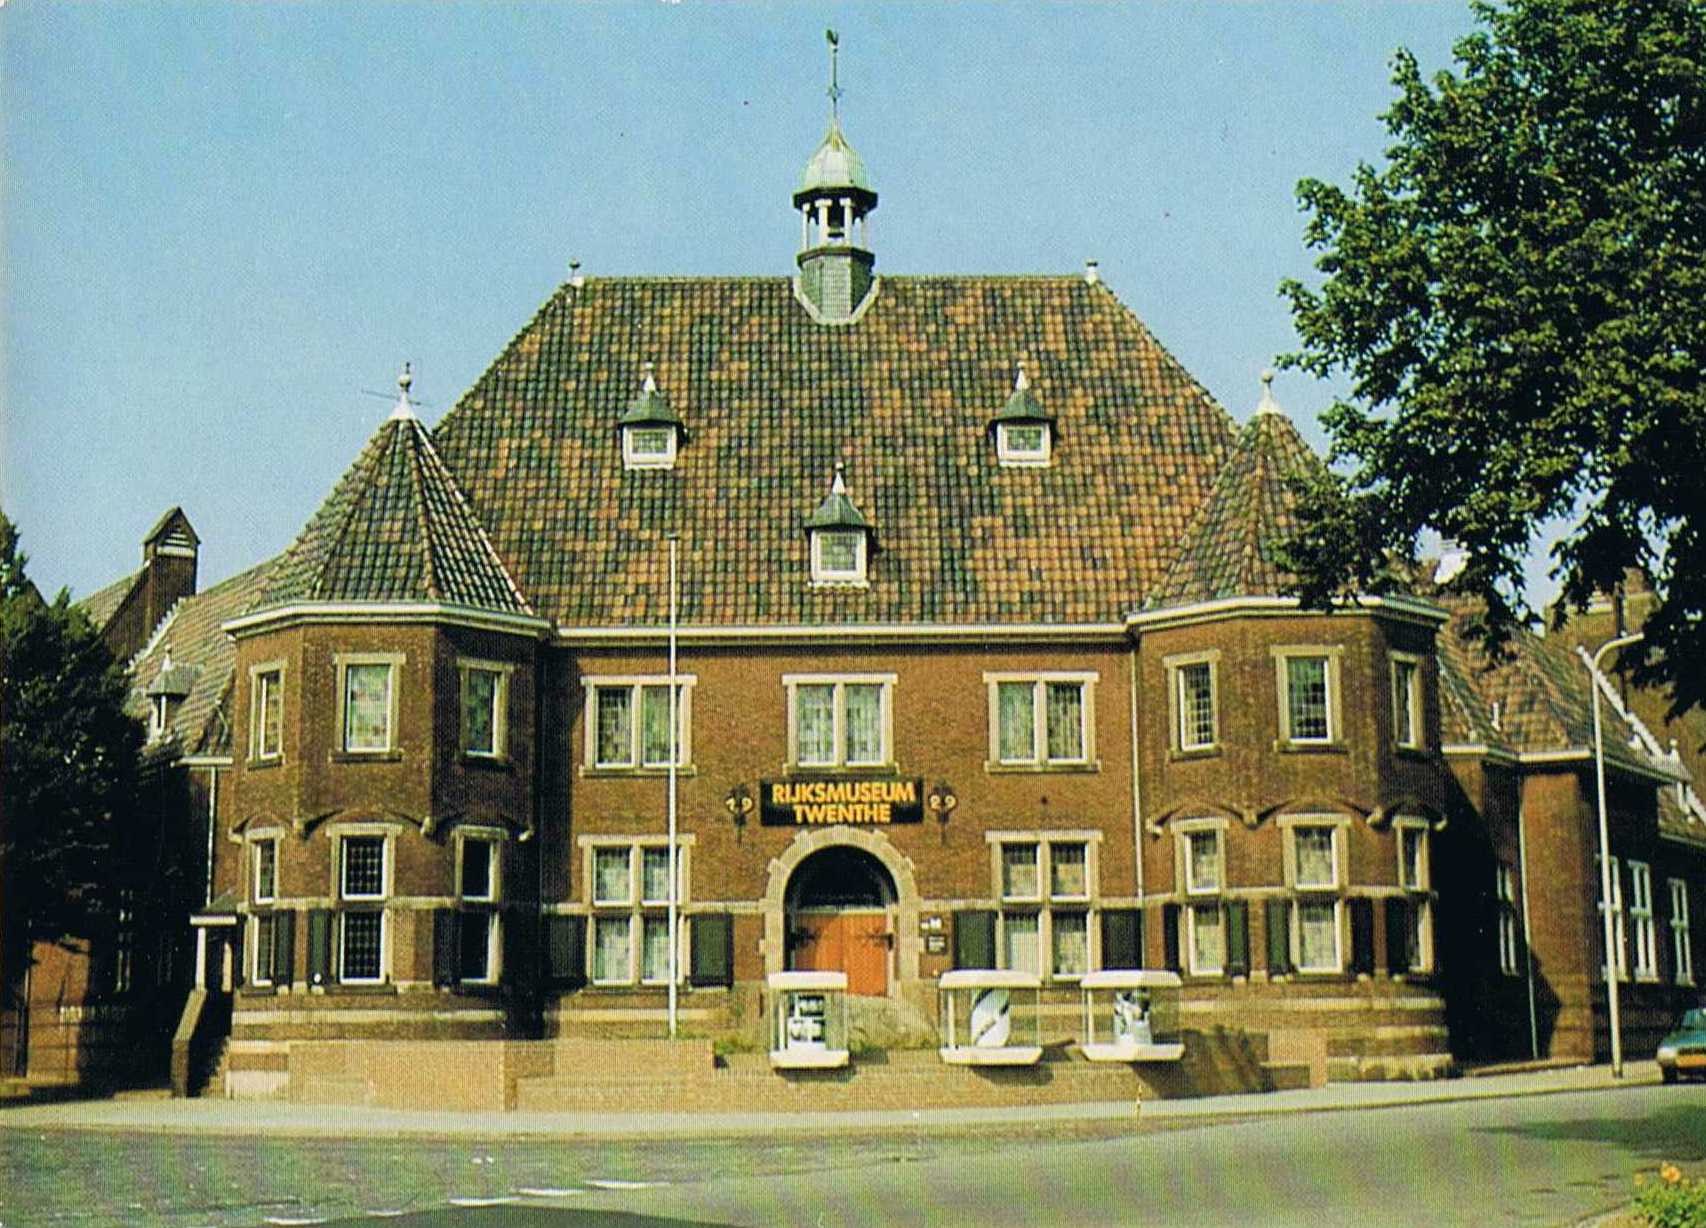 Rijksmuseum-1981.jpg